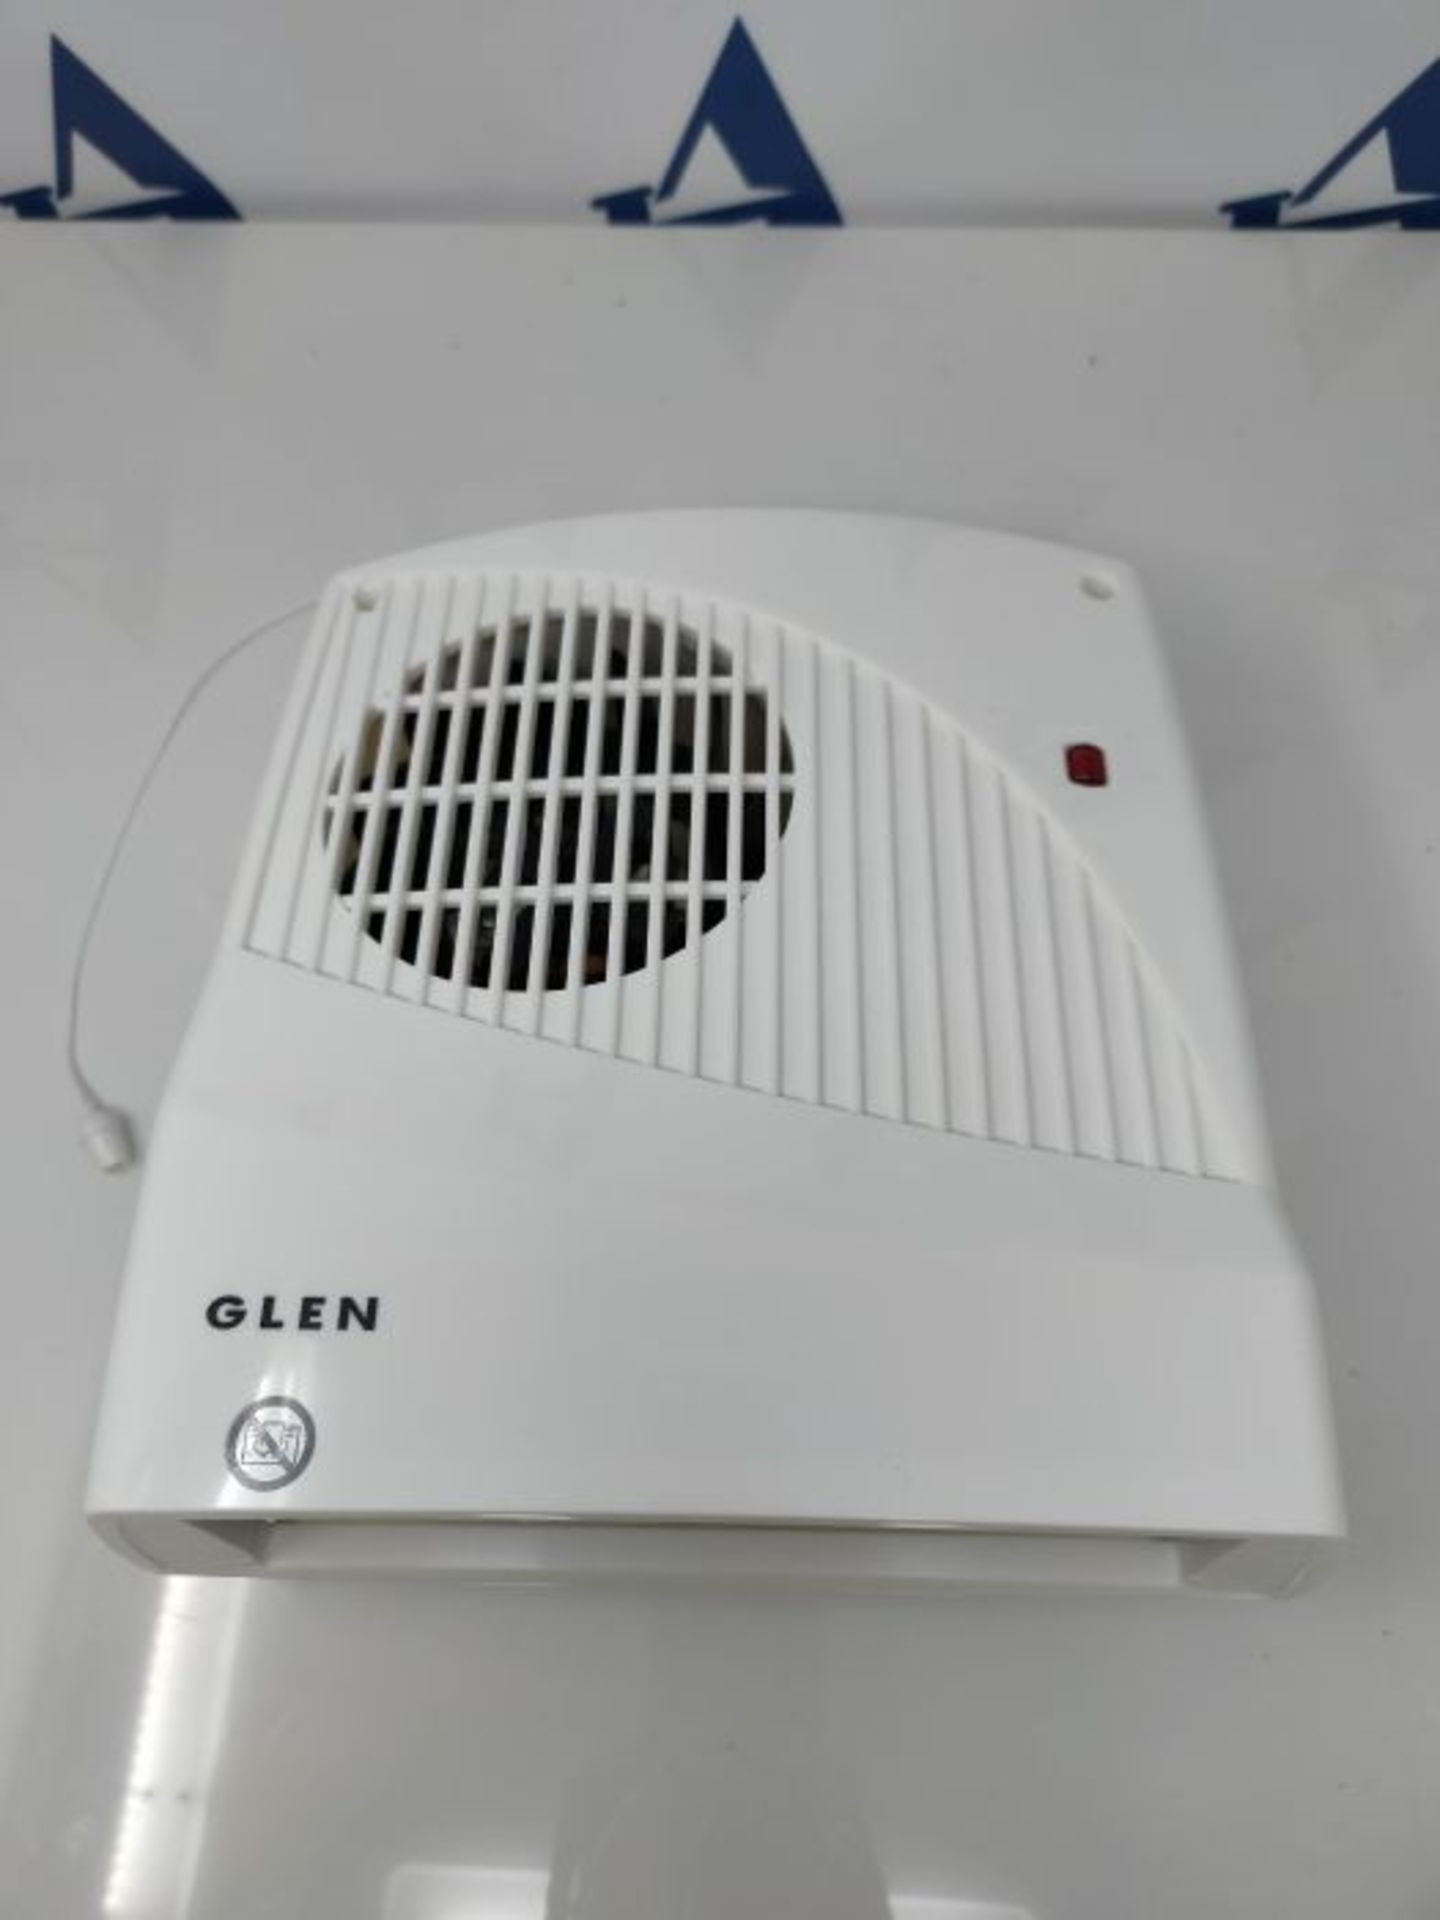 Glen GDF20E Downflow Bathroom Heater, White - Image 2 of 3